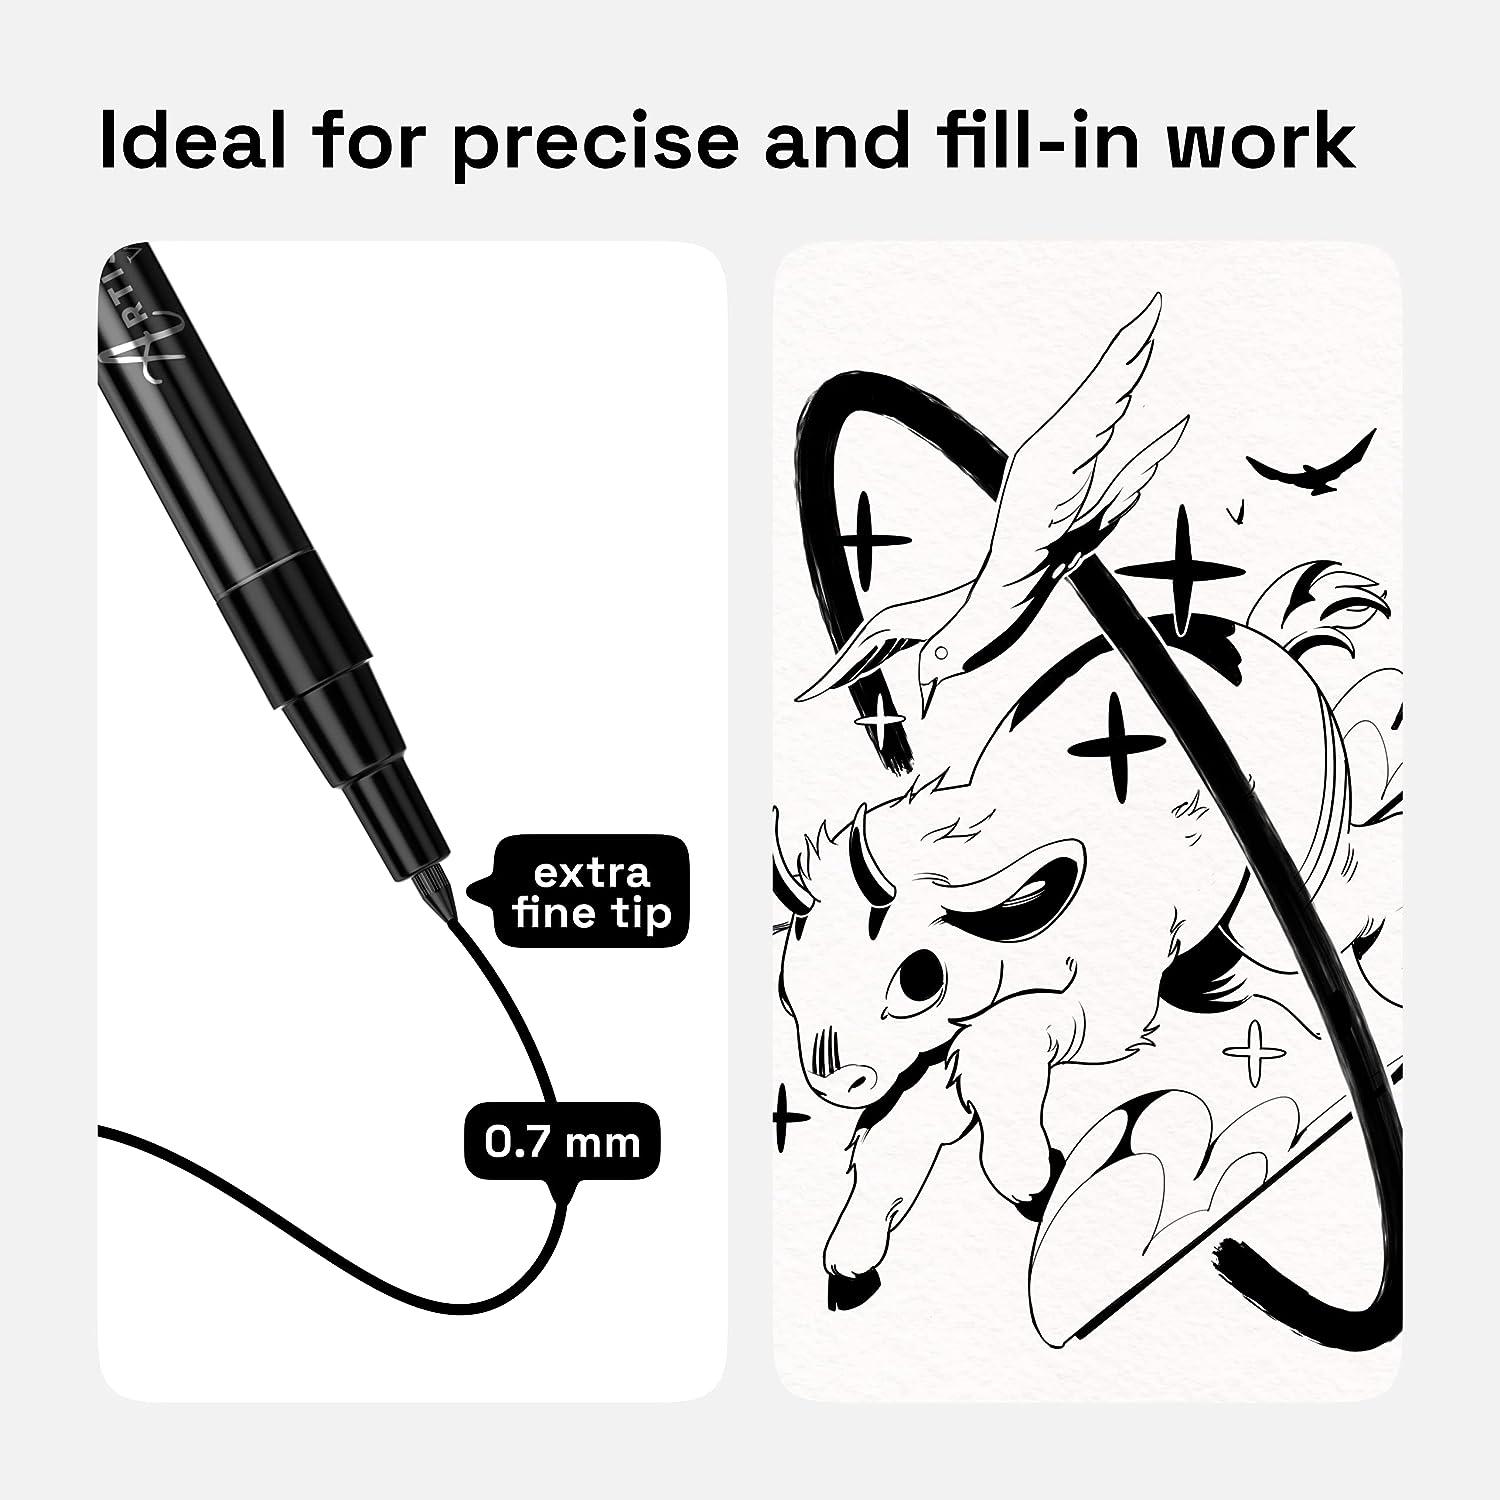 Extra Fine Black Drawing Pen Set